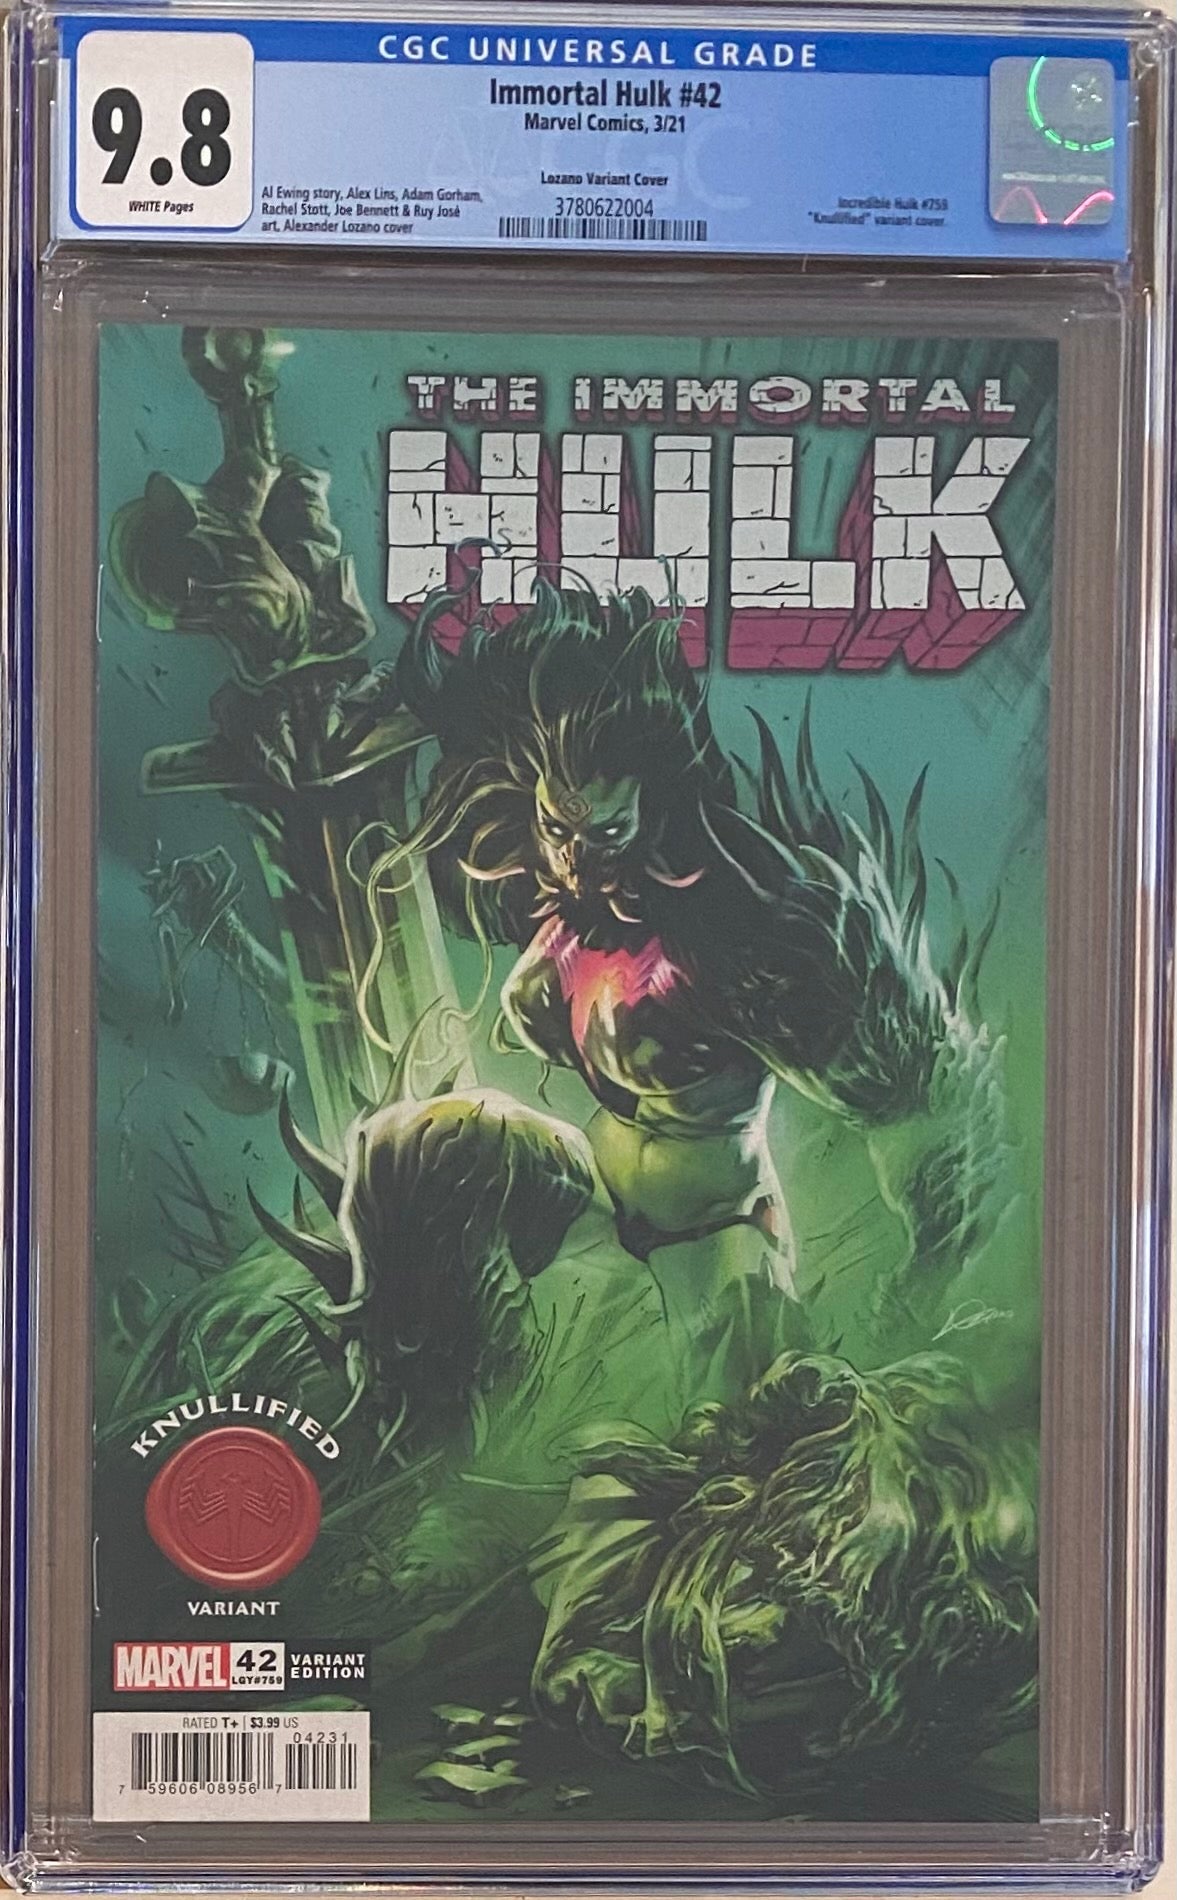 Immortal Hulk #42 "Knullified" Variant CGC 9.8